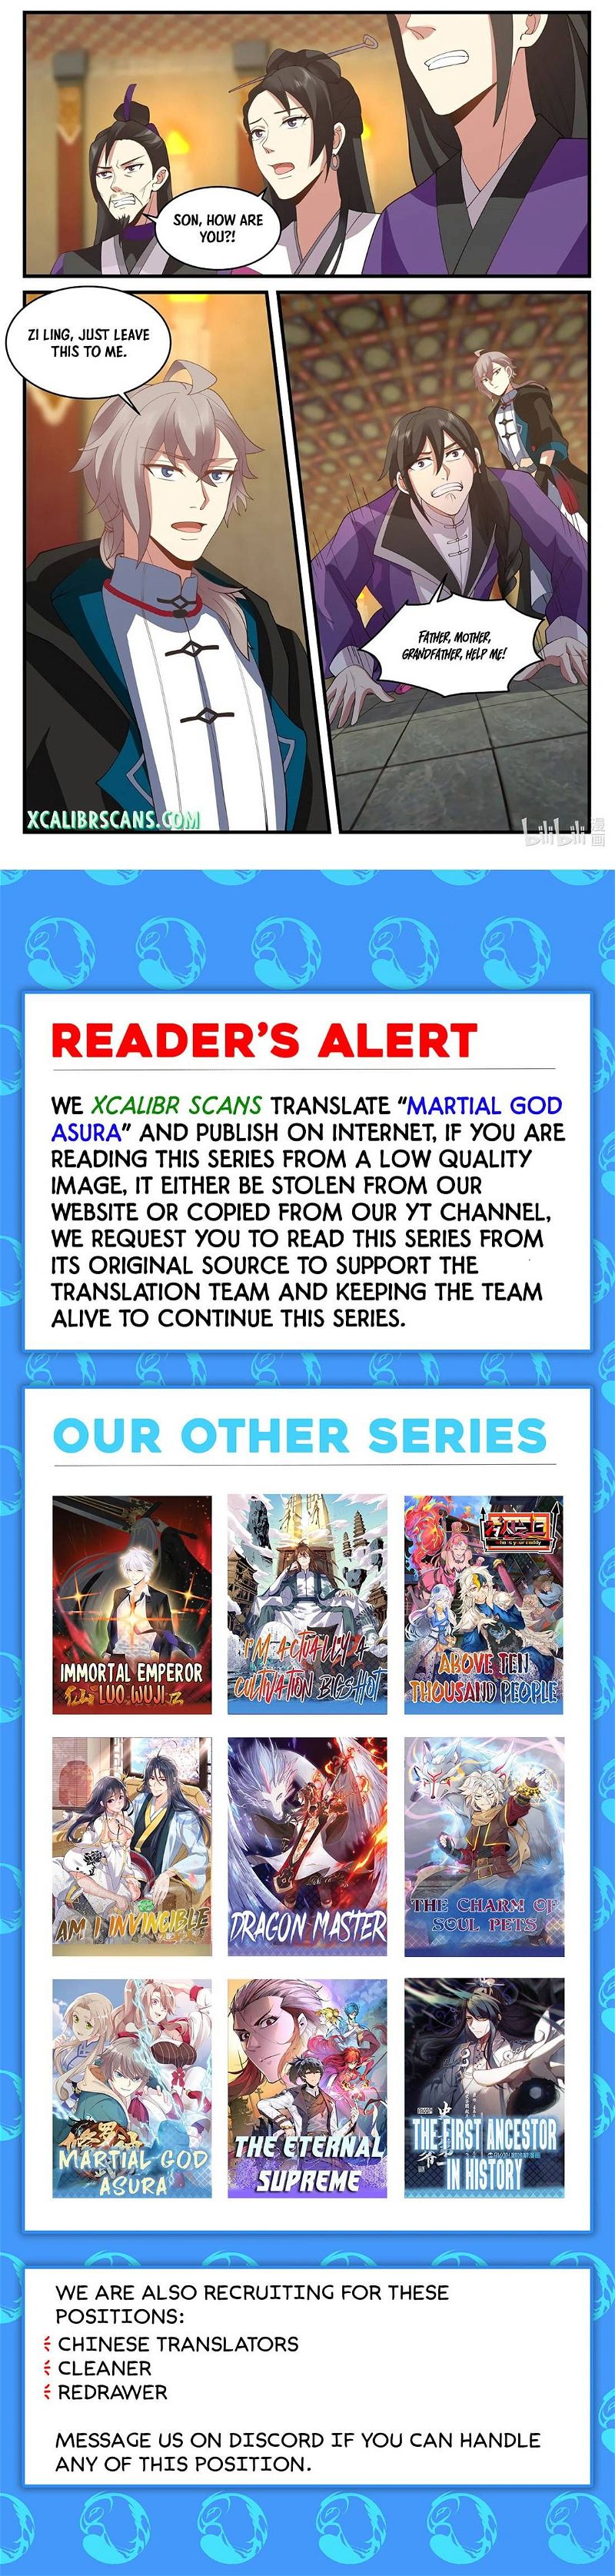 Martial God Asura Chapter 535 page 10